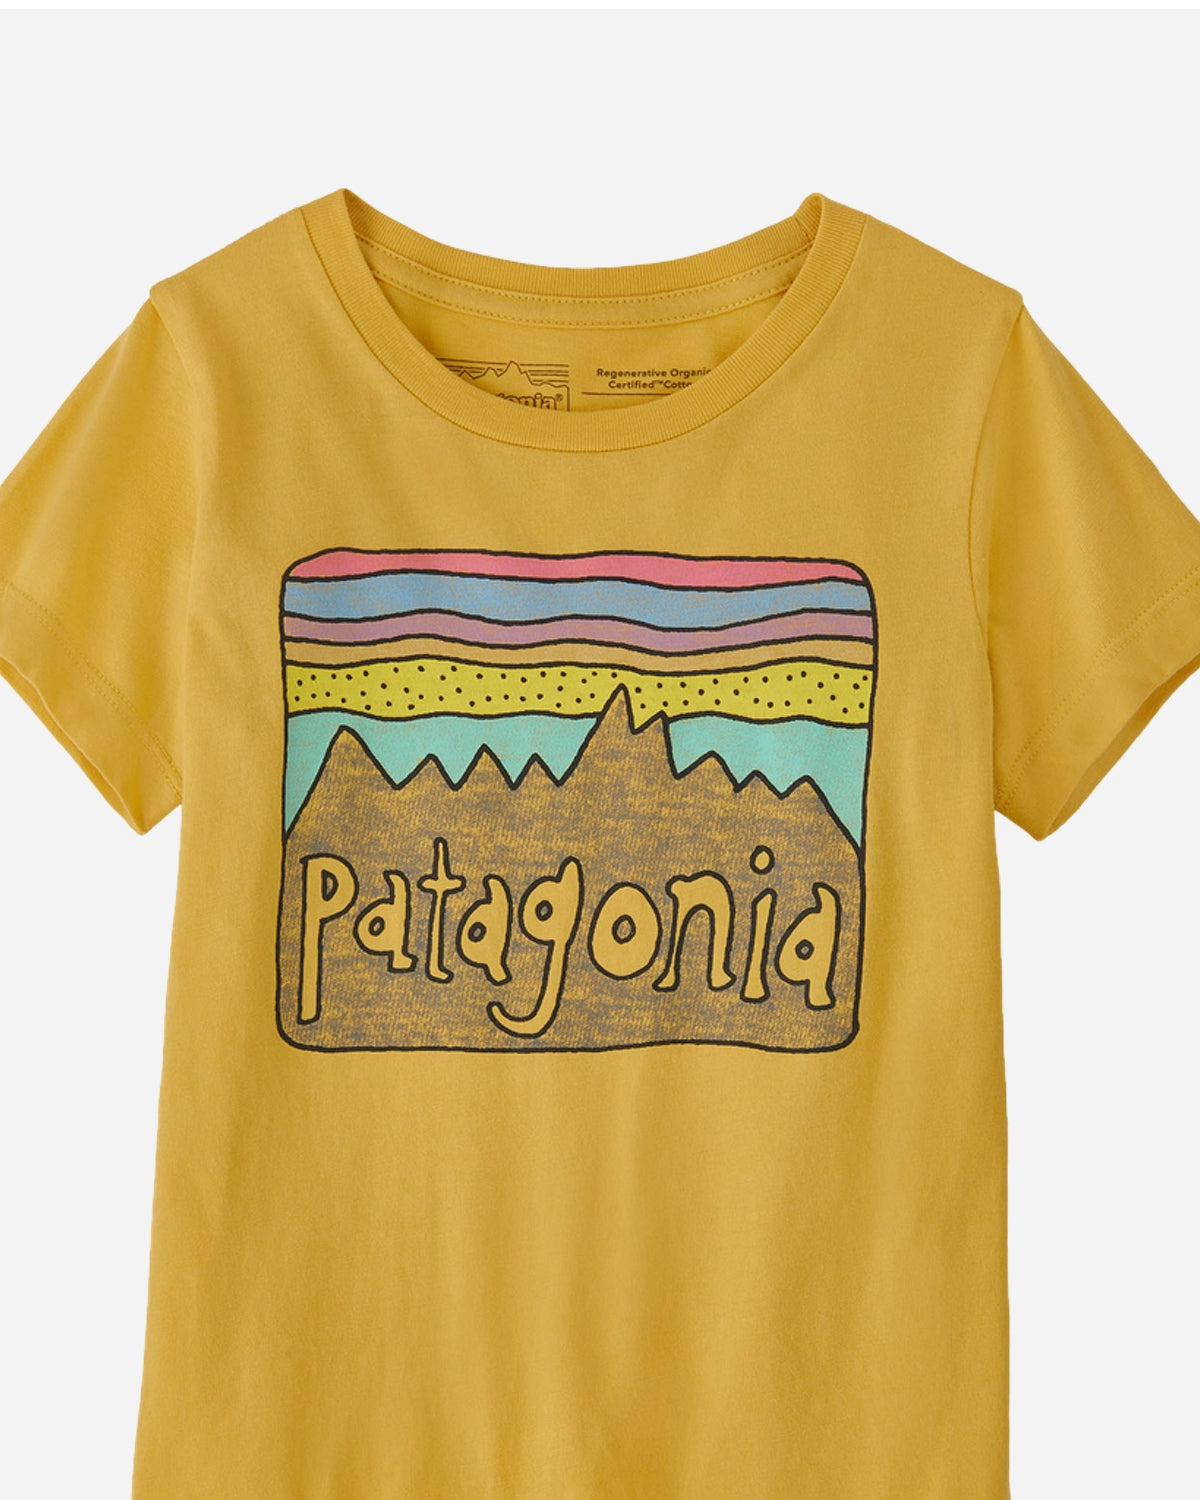 Kids Regenerative Fitz Roy Skies T-shirt - Surfboard Yellow - Patagonia - Munkstore.dk